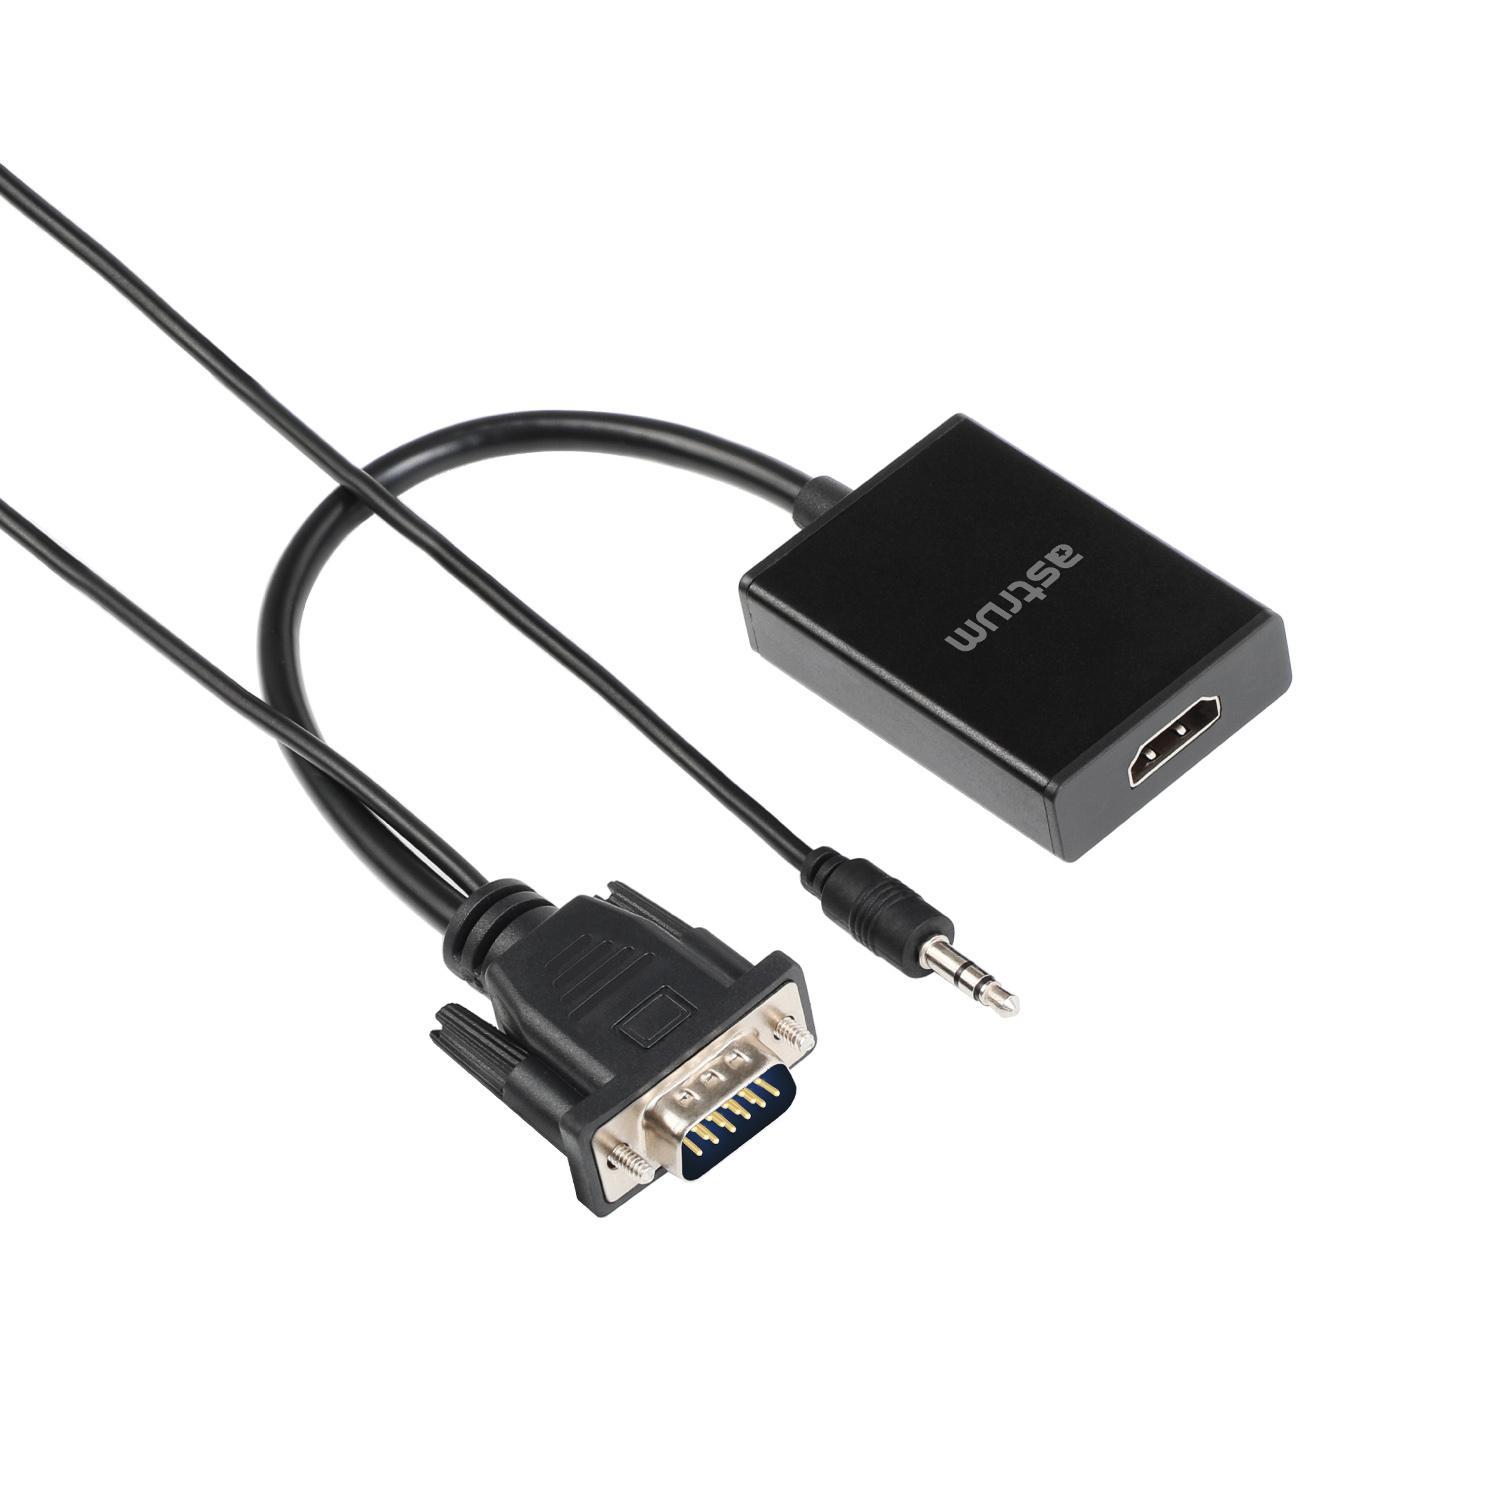 Mevrouw Gewond raken verkwistend DA510 VGA Male to HDMI Female + Audio Adapter – Experience the difference